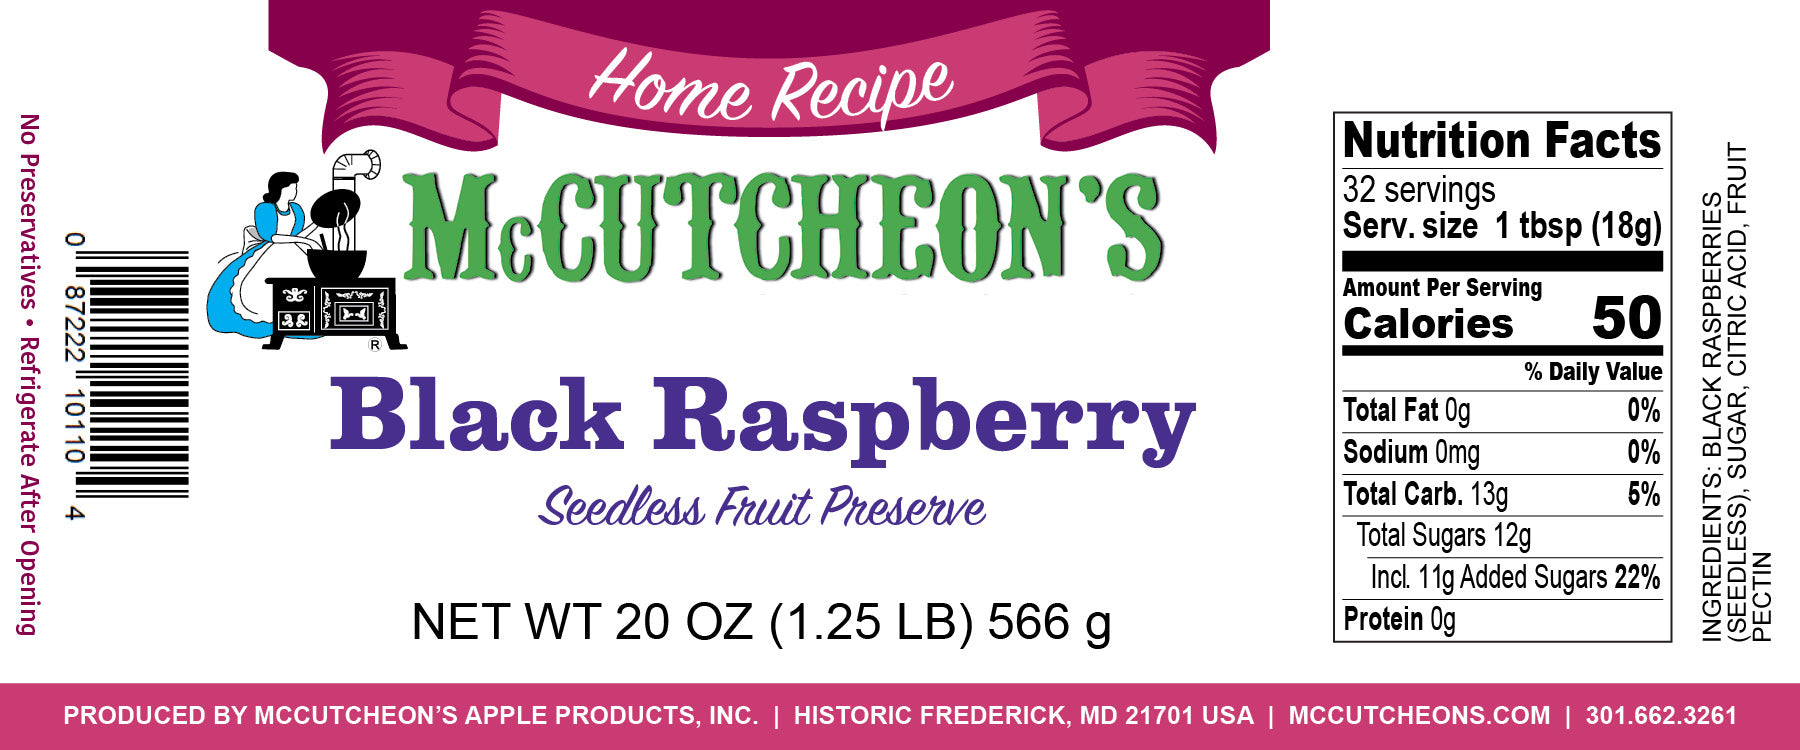 nutritional label for McCutcheon's Black Raspberry preserves